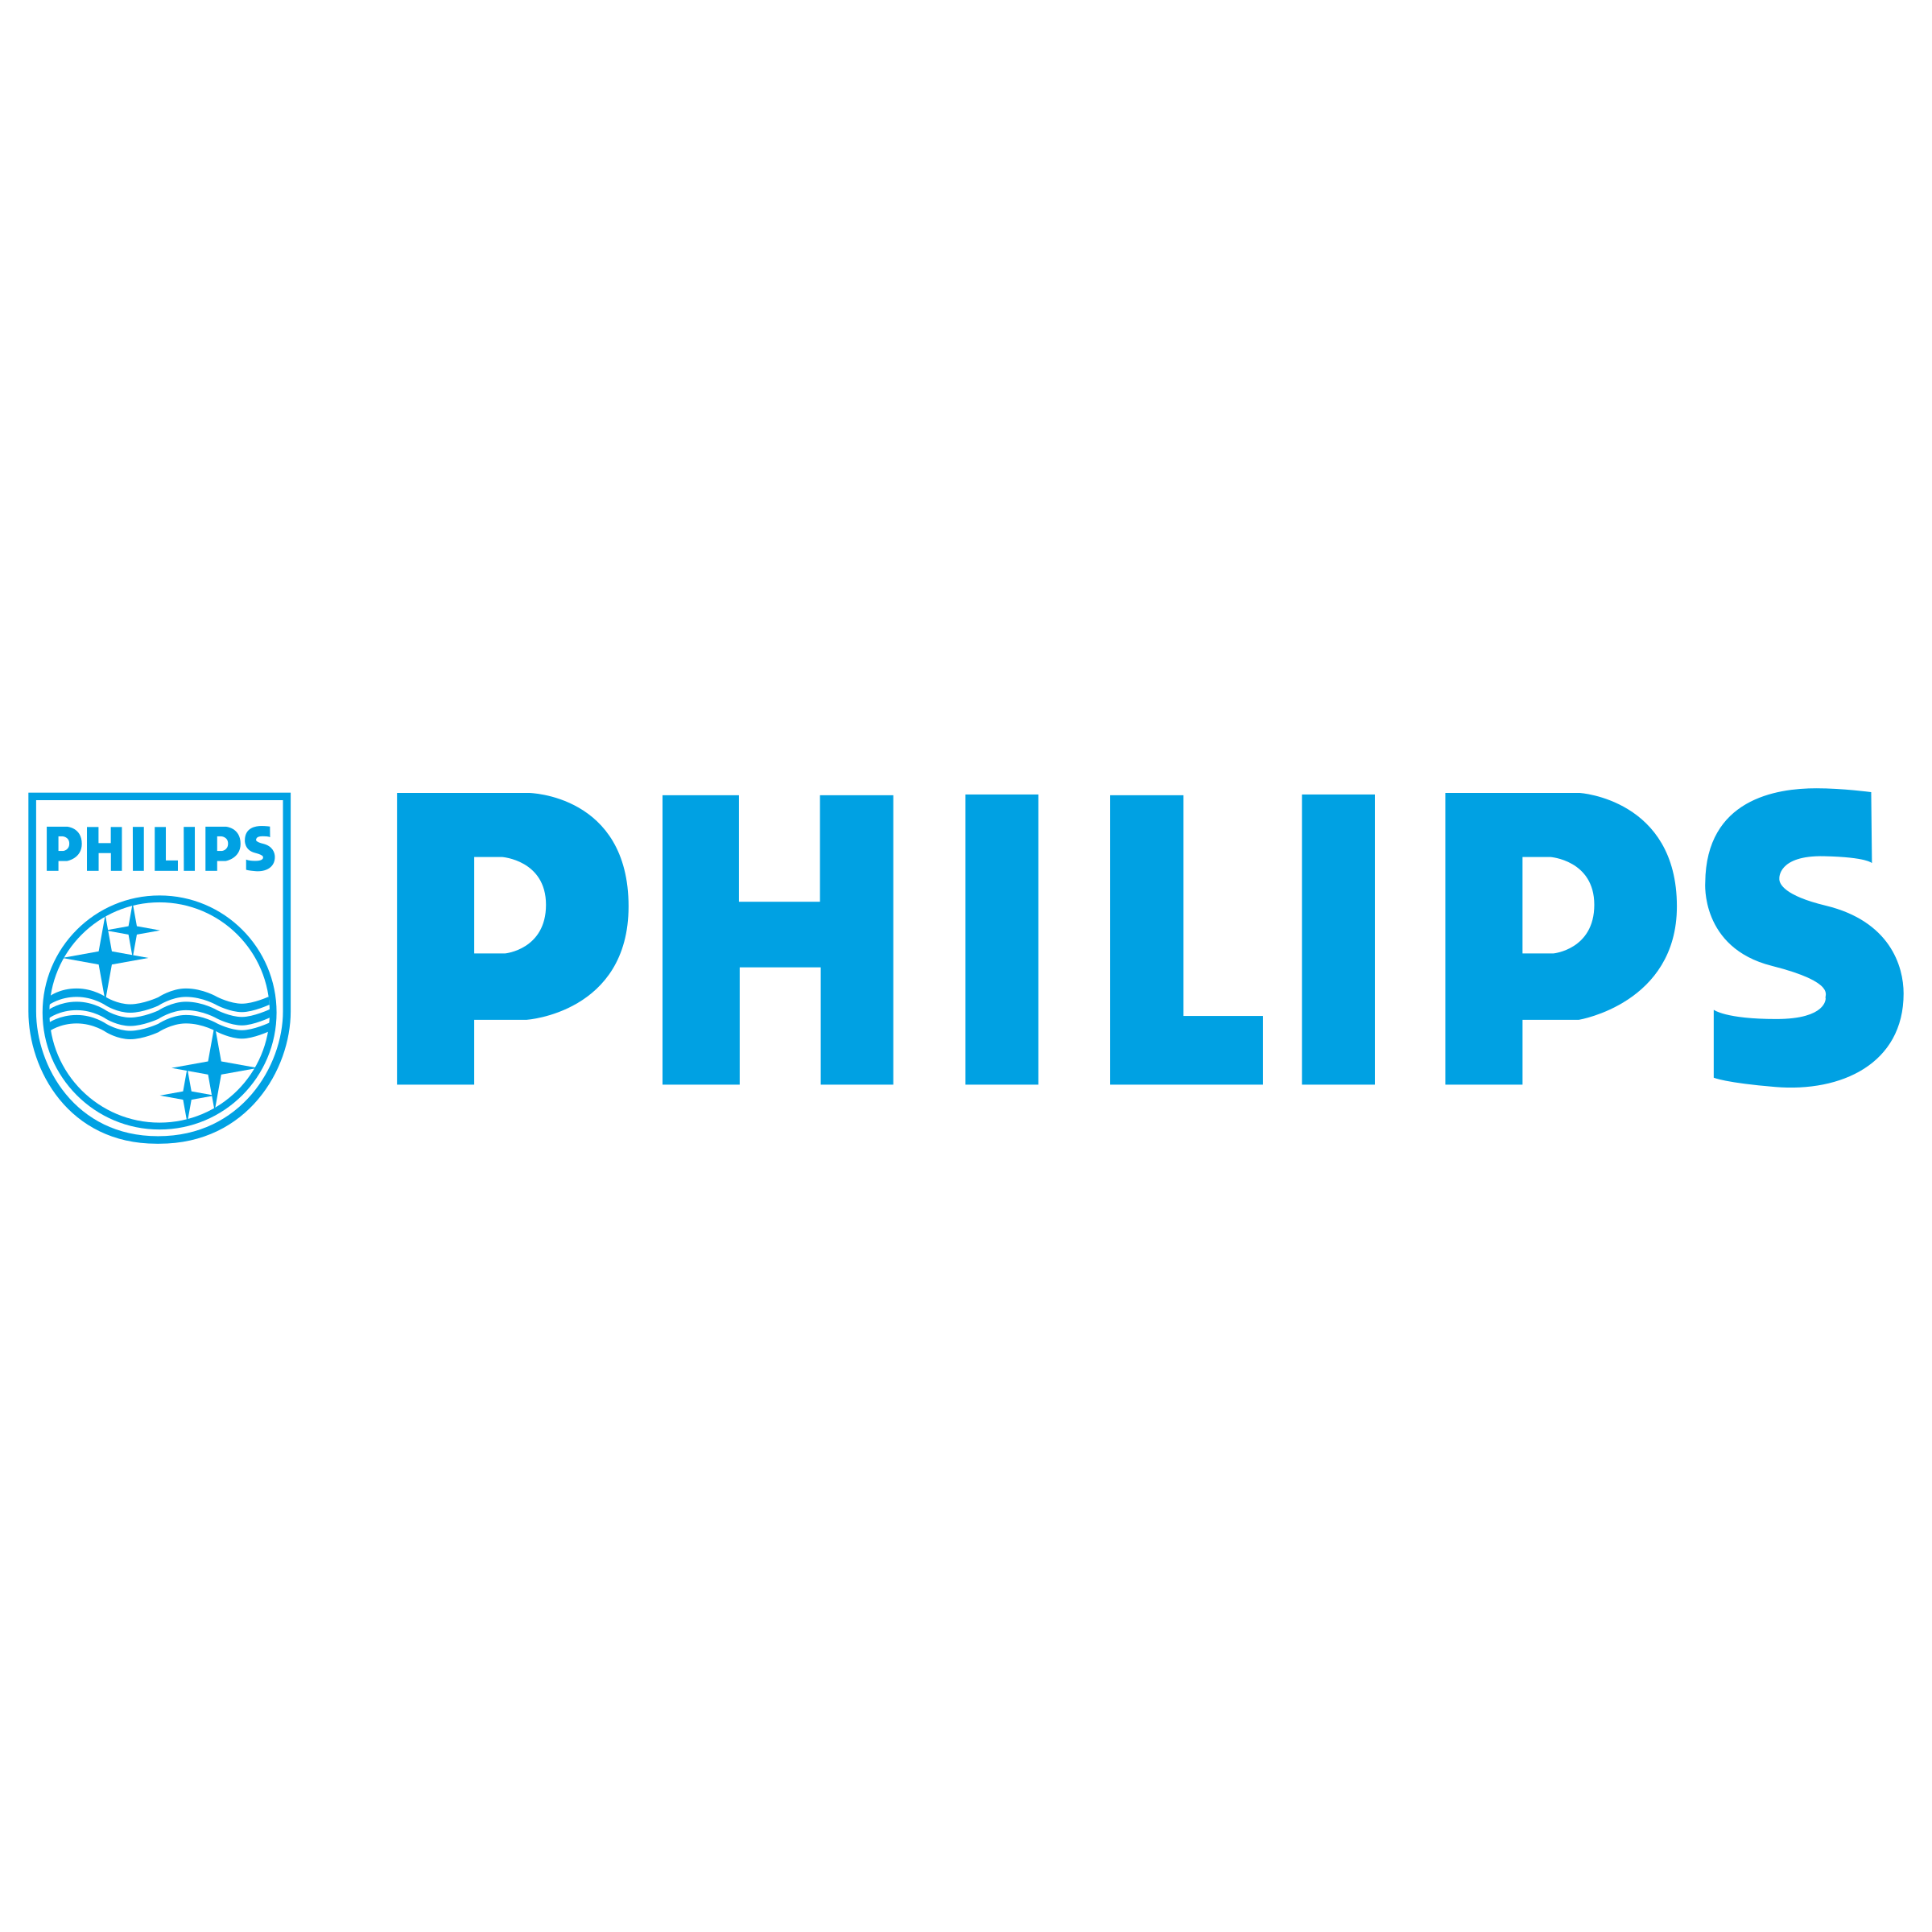 philips-2-logo-png-transparent.png